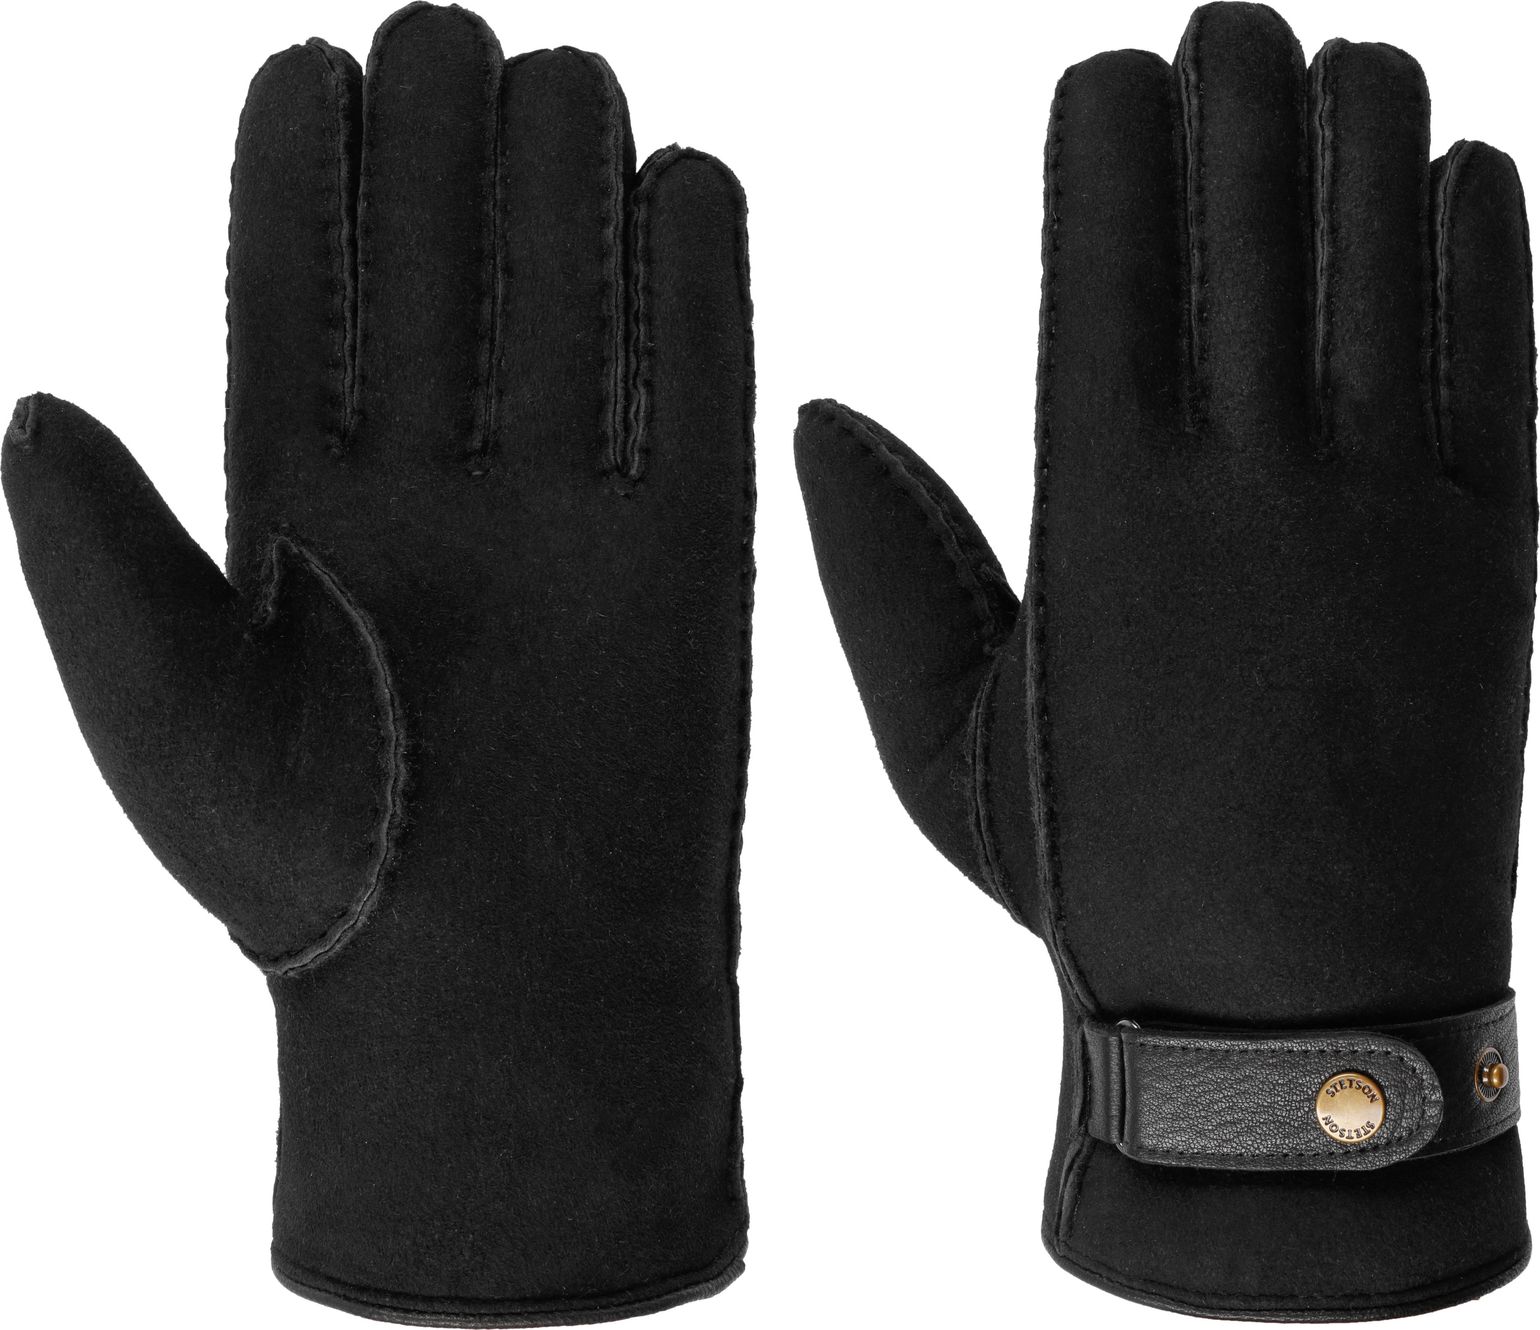 Men's Gloves Lambfur/Deerskin Black